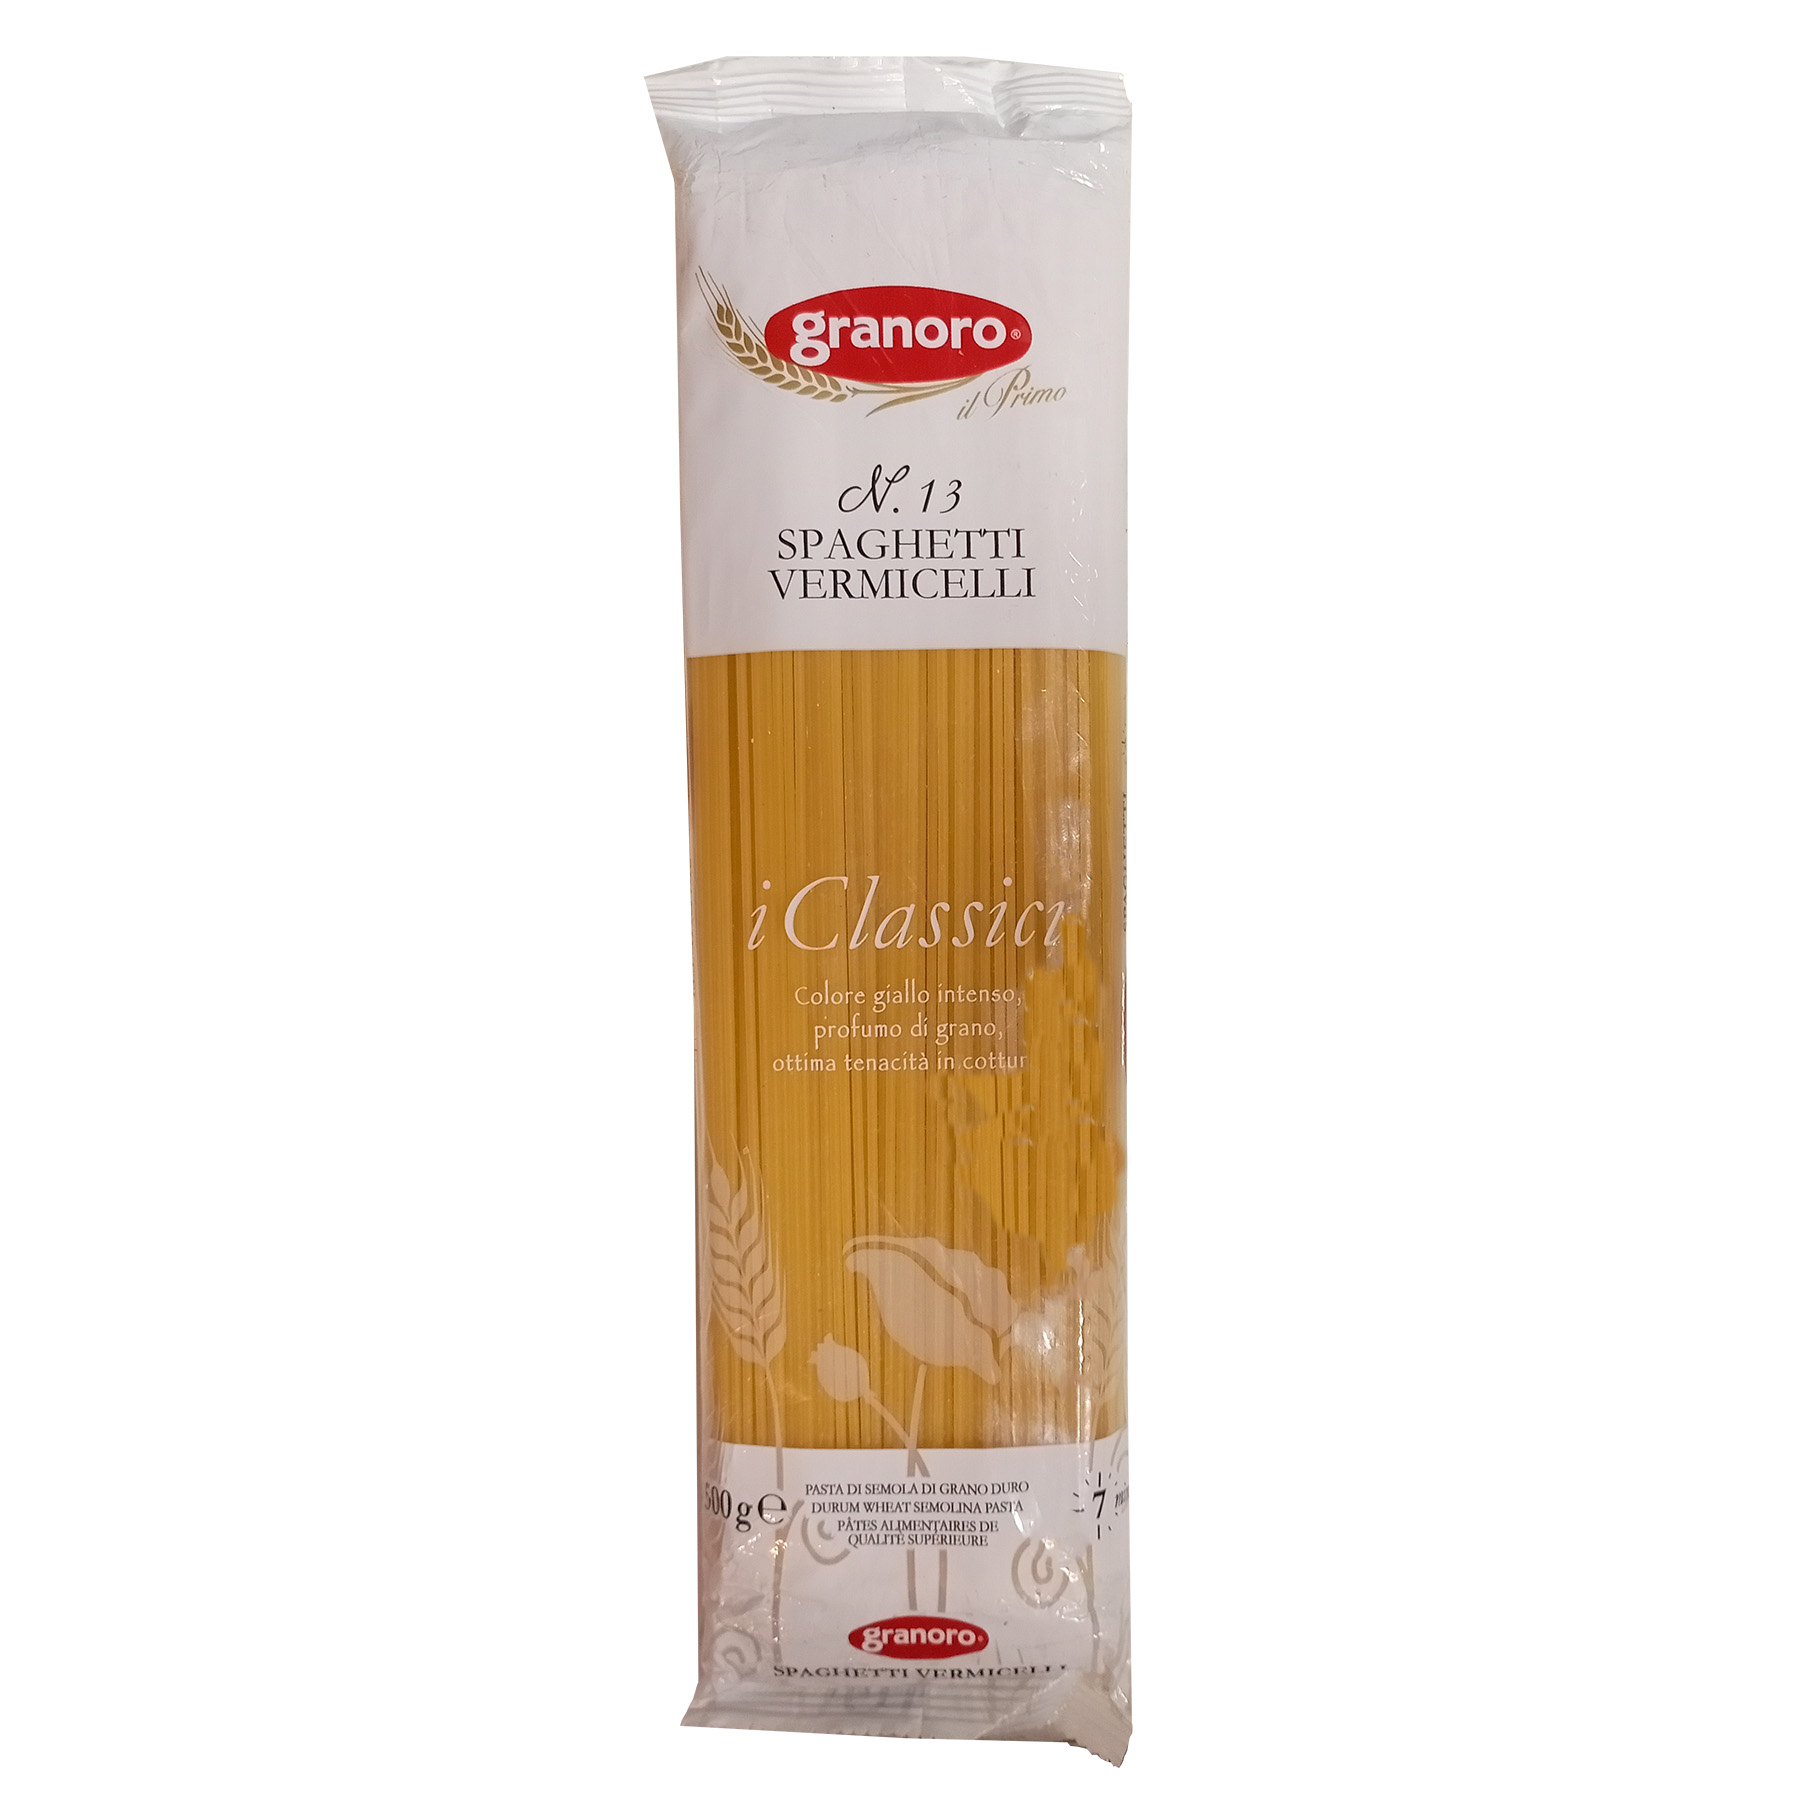 ماکارونی اسپاگتی کلاسیک گرانورو - 500 گرم